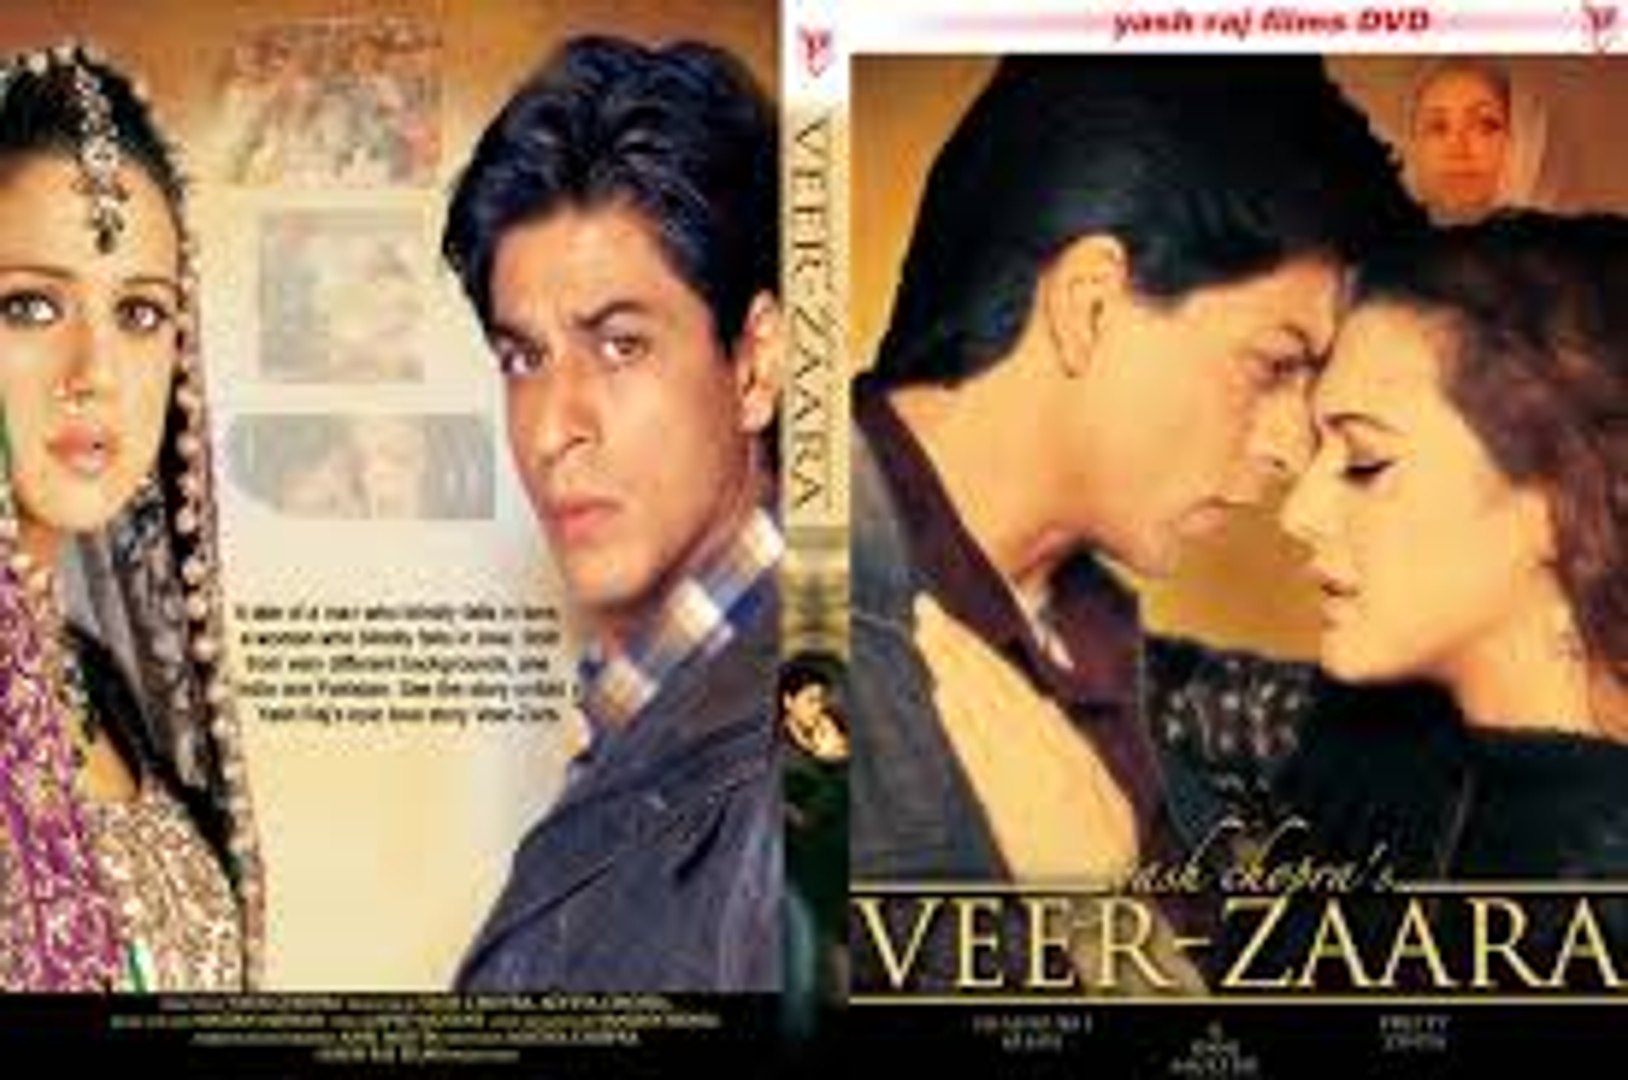 Veer zaara full movie with english subtitles